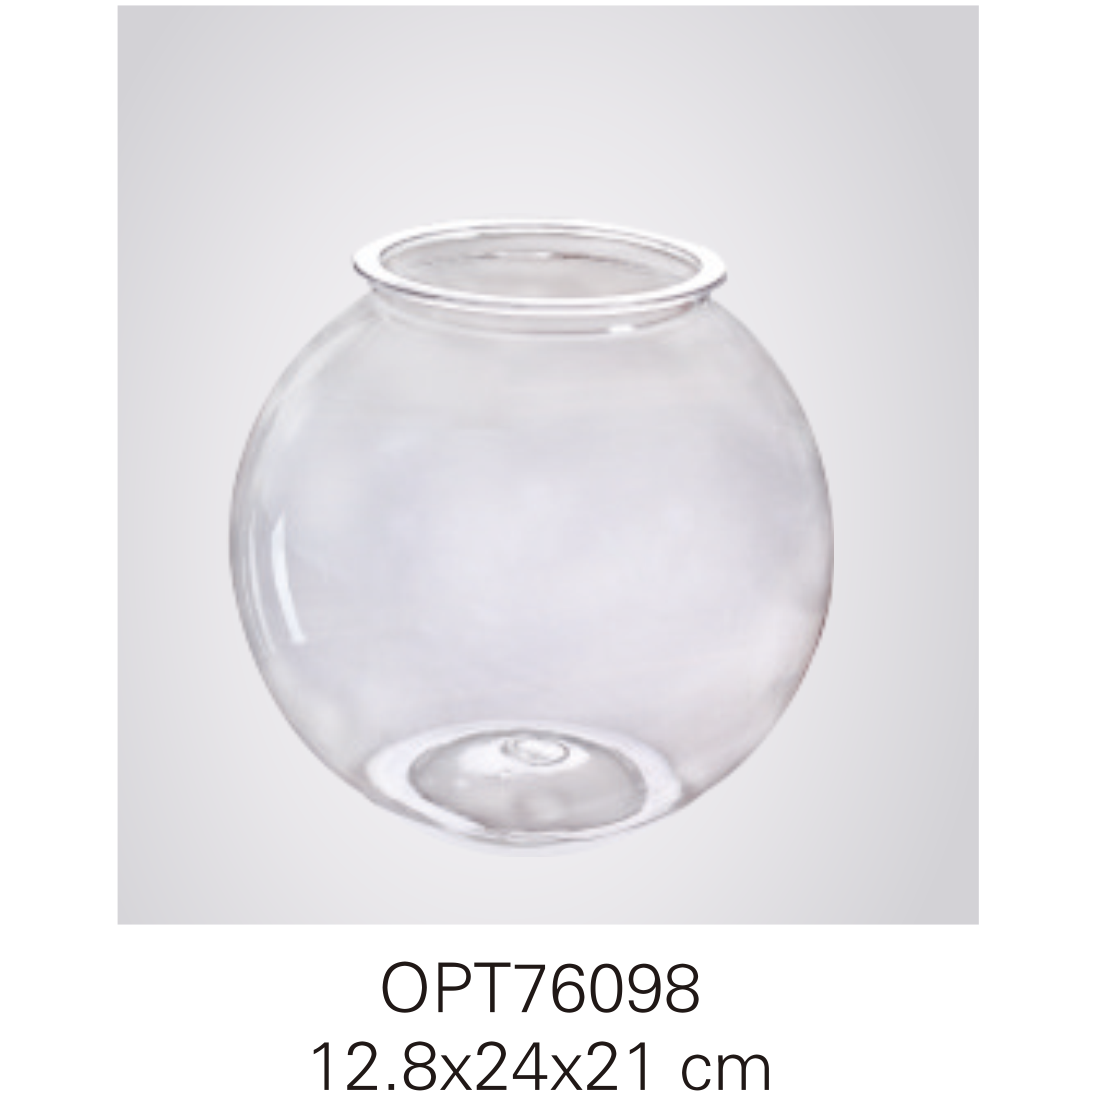 OPT76098 12.8x24x21cm fishbowls